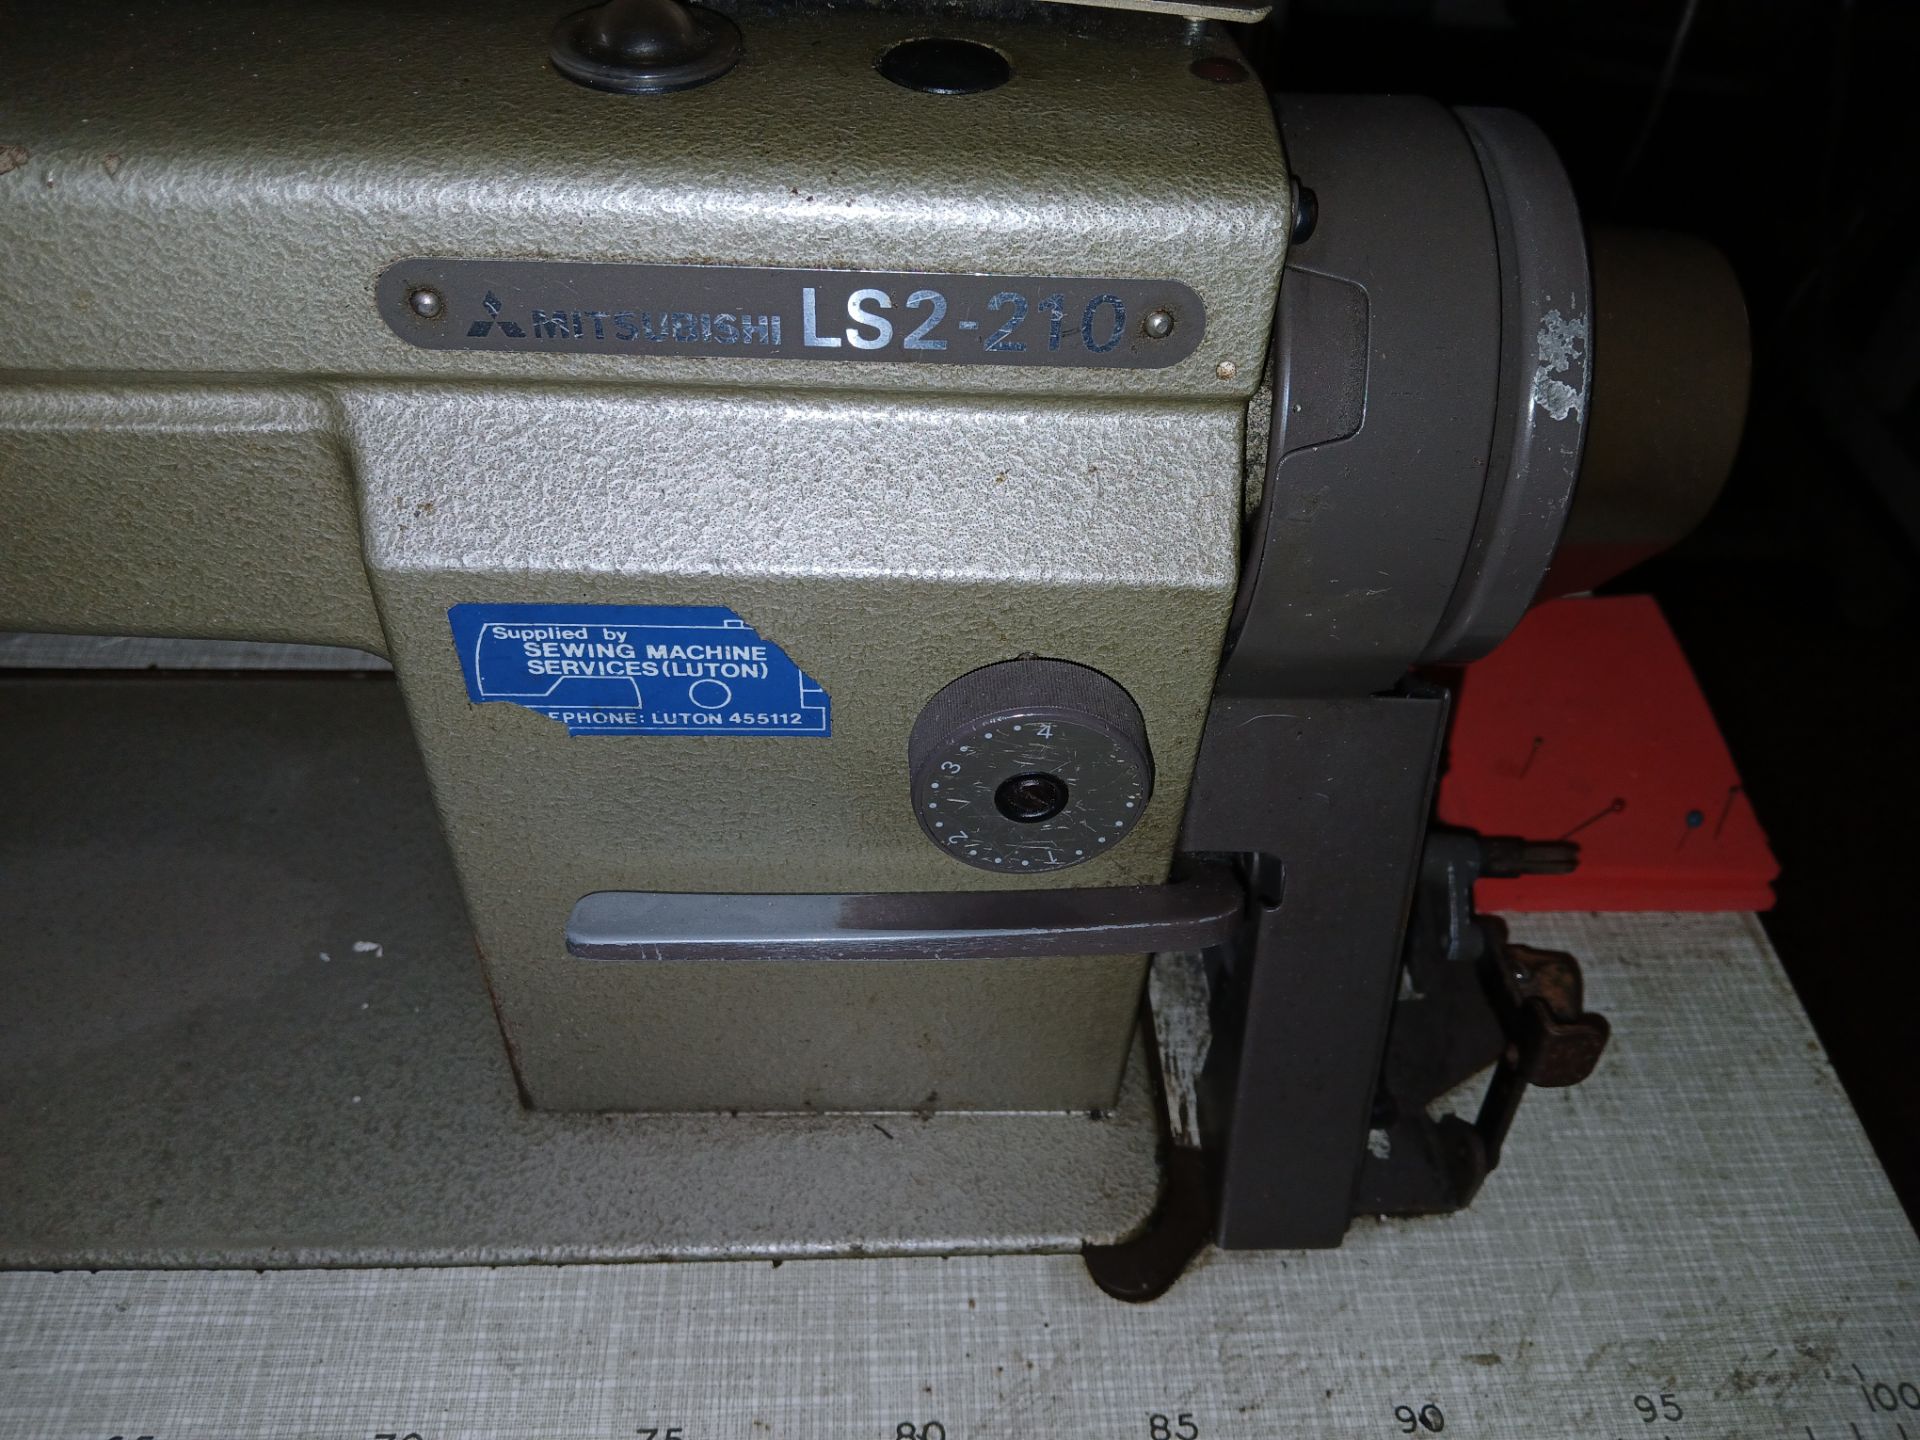 Mitsubishi LS2-210 sewing machine - Image 3 of 5